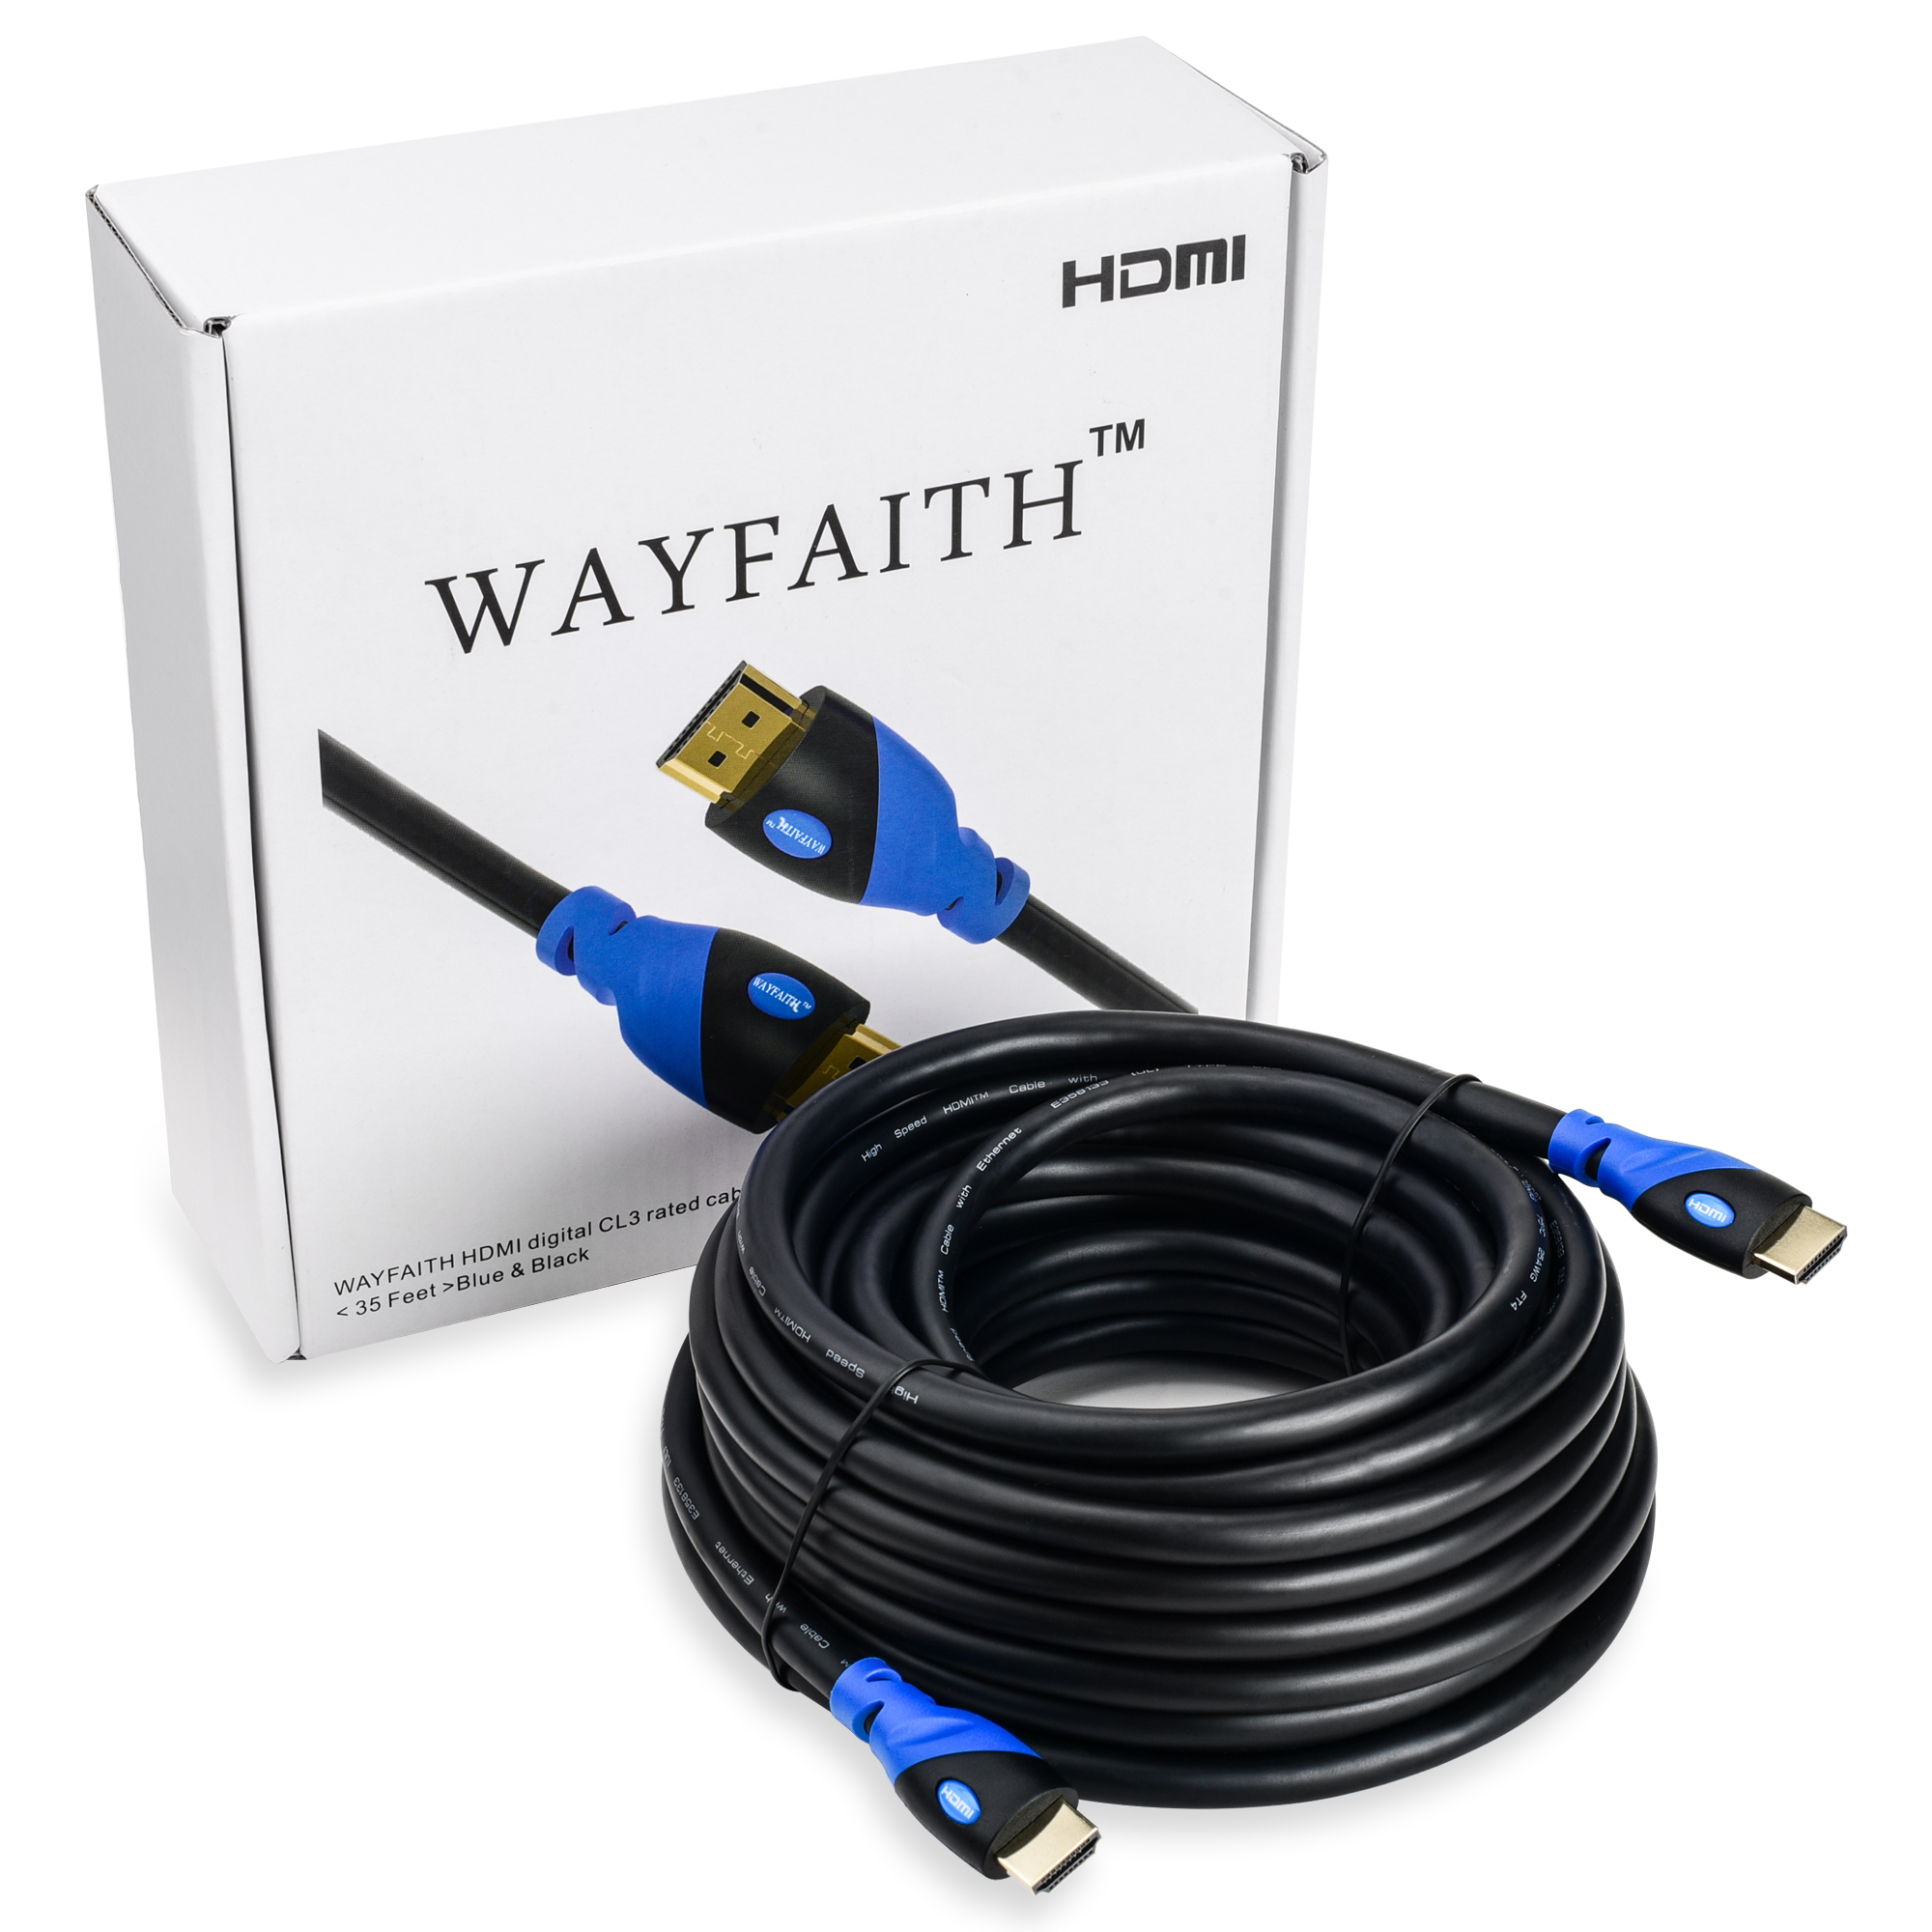 WAYFAITH HDMI Digital CL3 rated 4K 30Hz High Speed Cable 35 Feet 